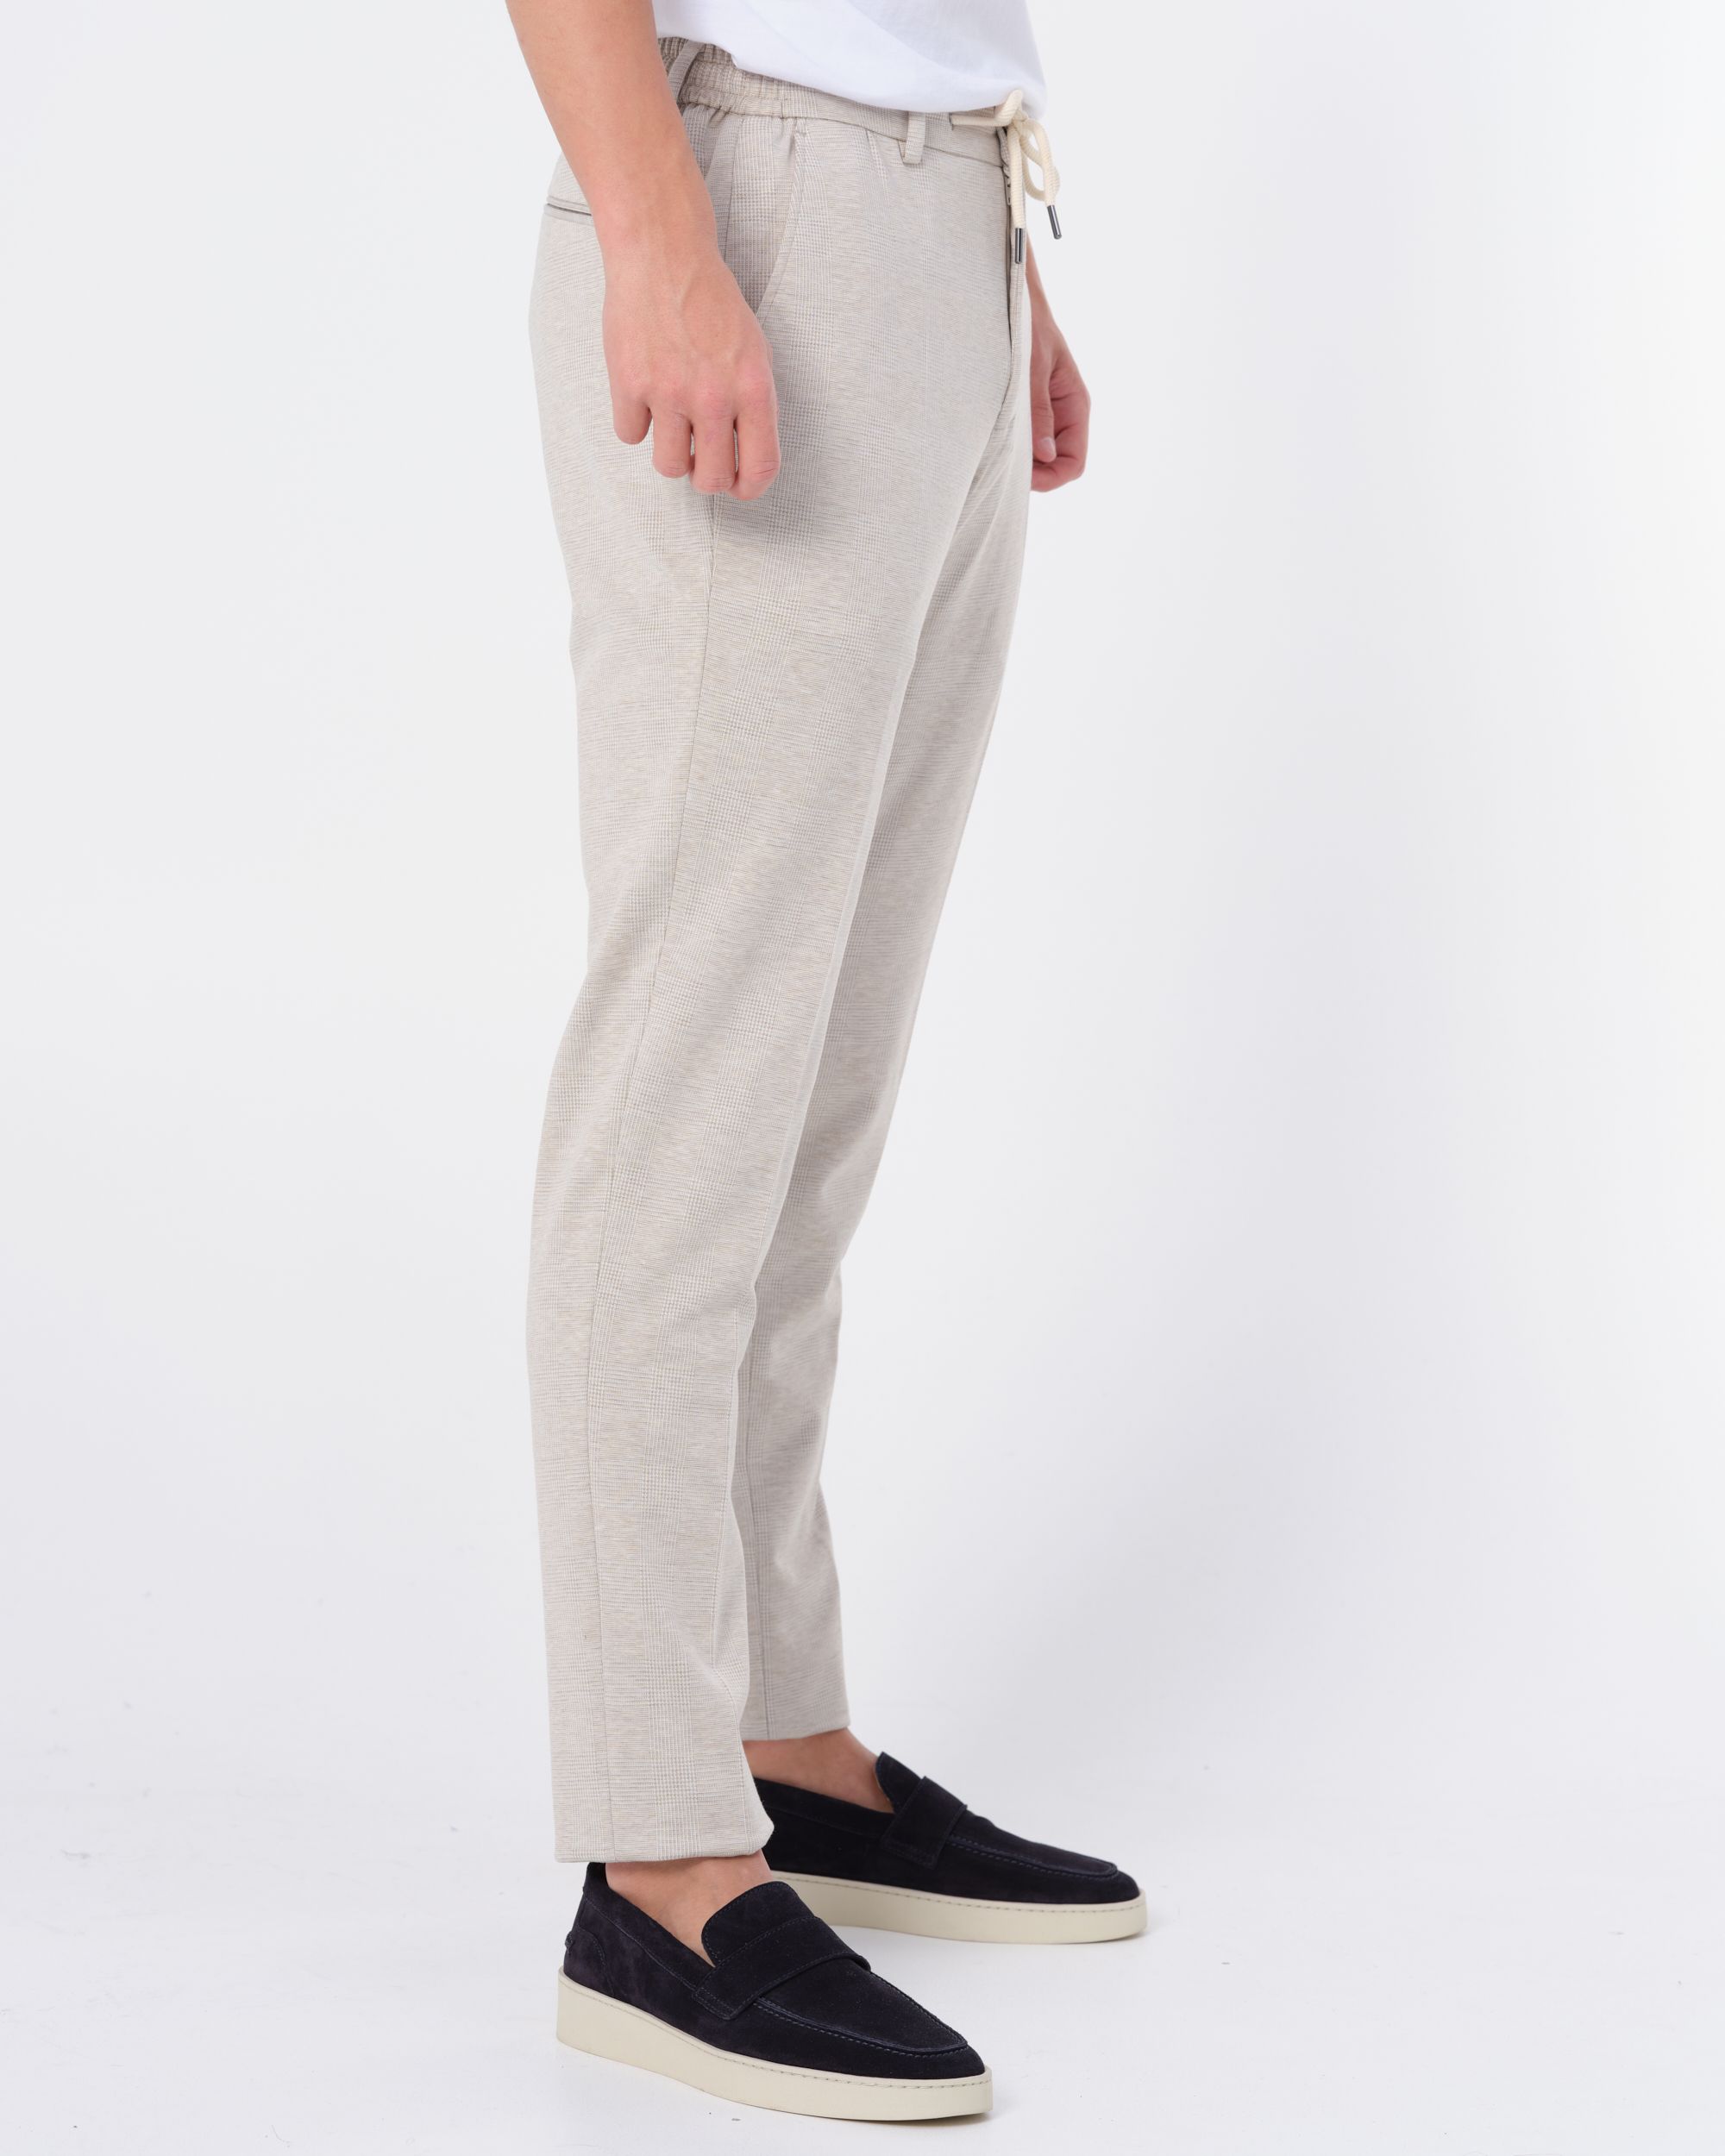 The BLUEPRINT Premium - Pantalon Beige grote ruit 084020-001-46